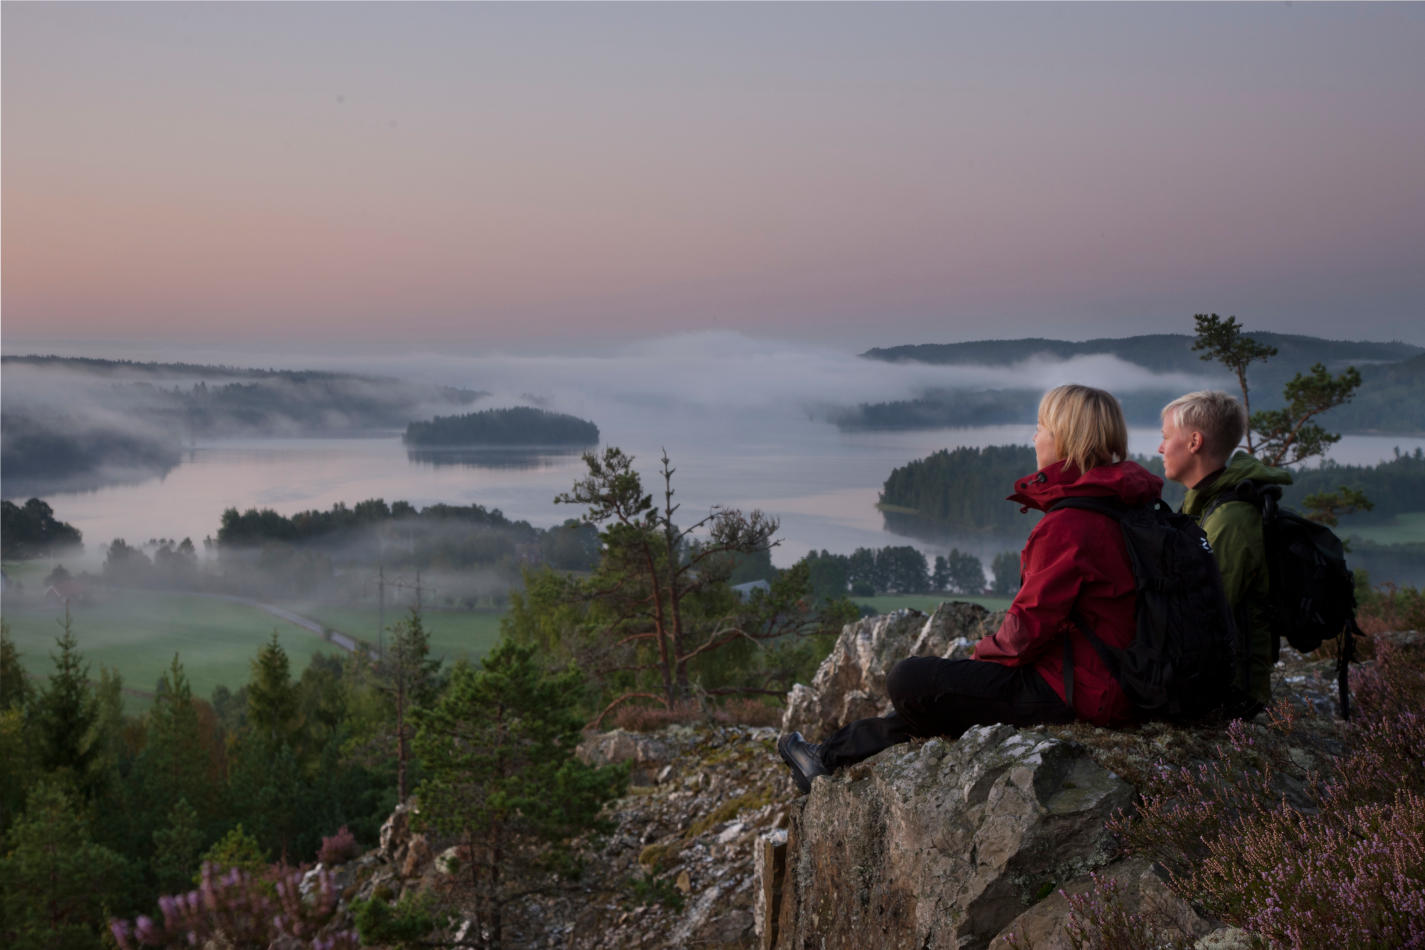 West Sweden | the outdoor destination of Scandinavia | Scan Magazine